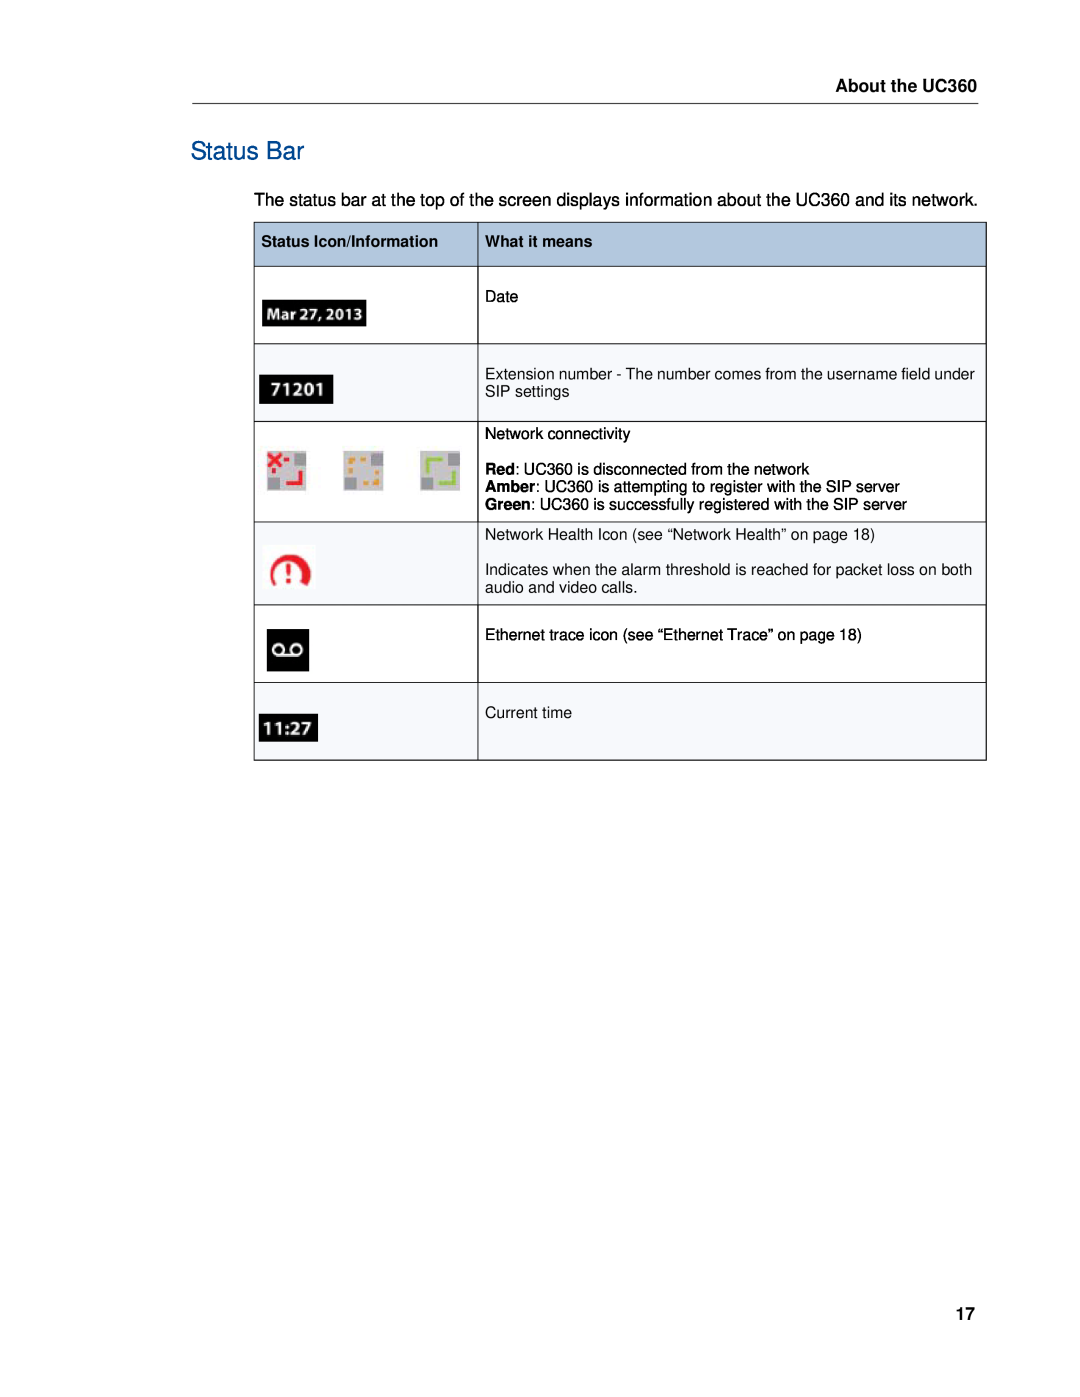 Mitel UC360 manual Status Bar, Status Icon/Information, What it means 